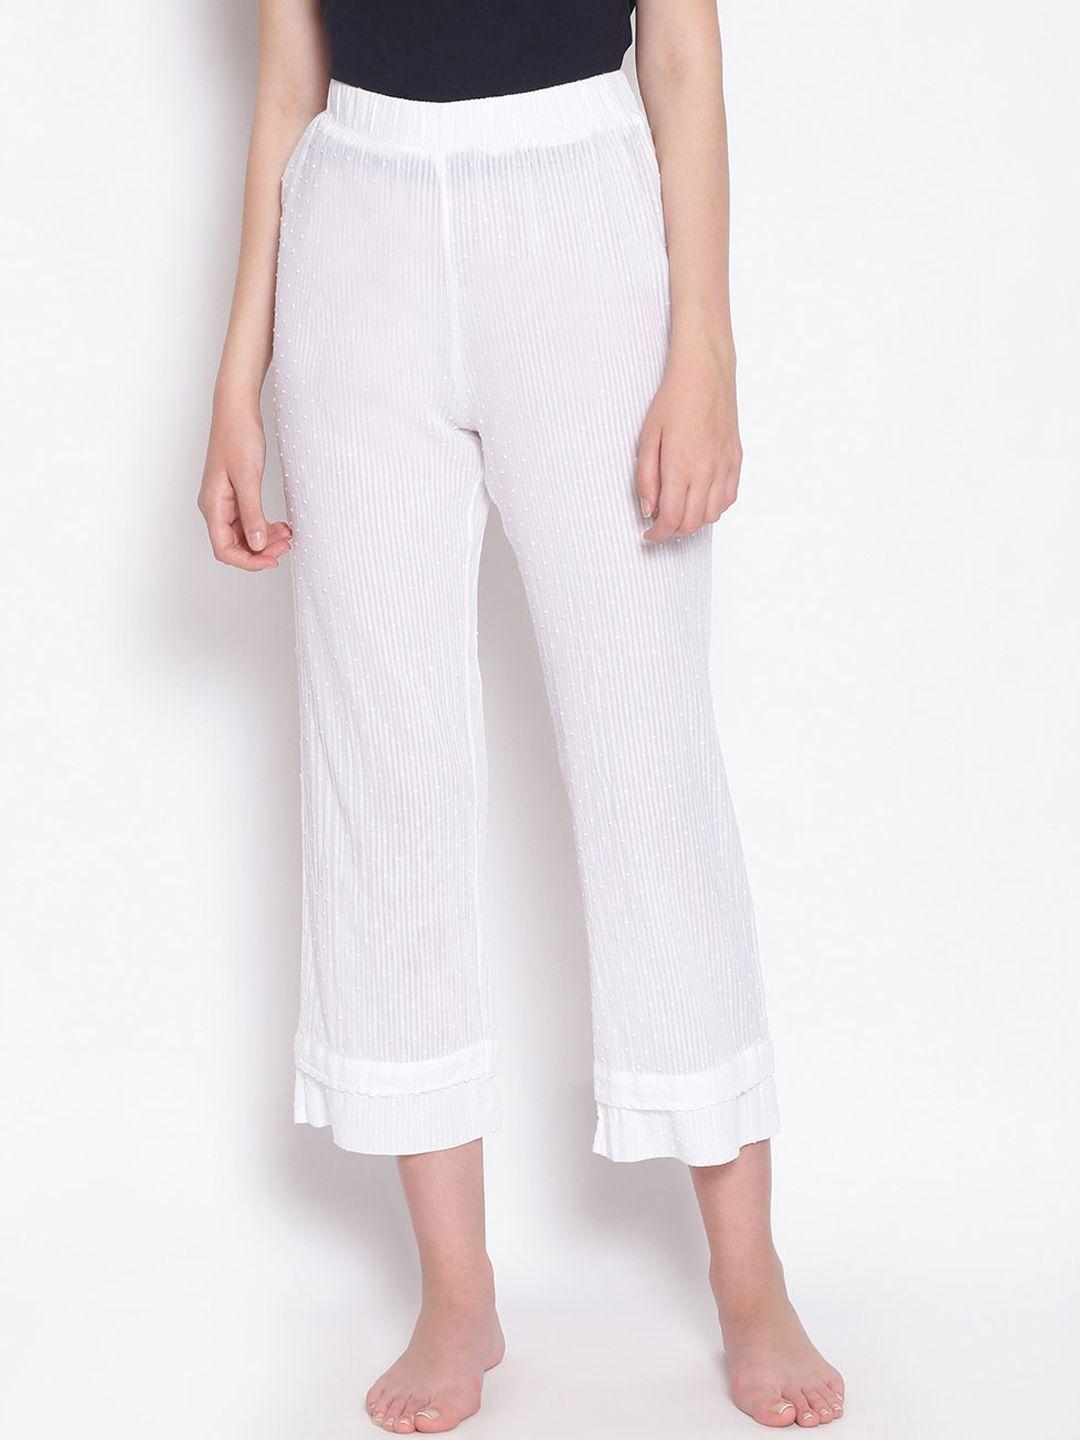 oxolloxo women's cotton solid white pyjama